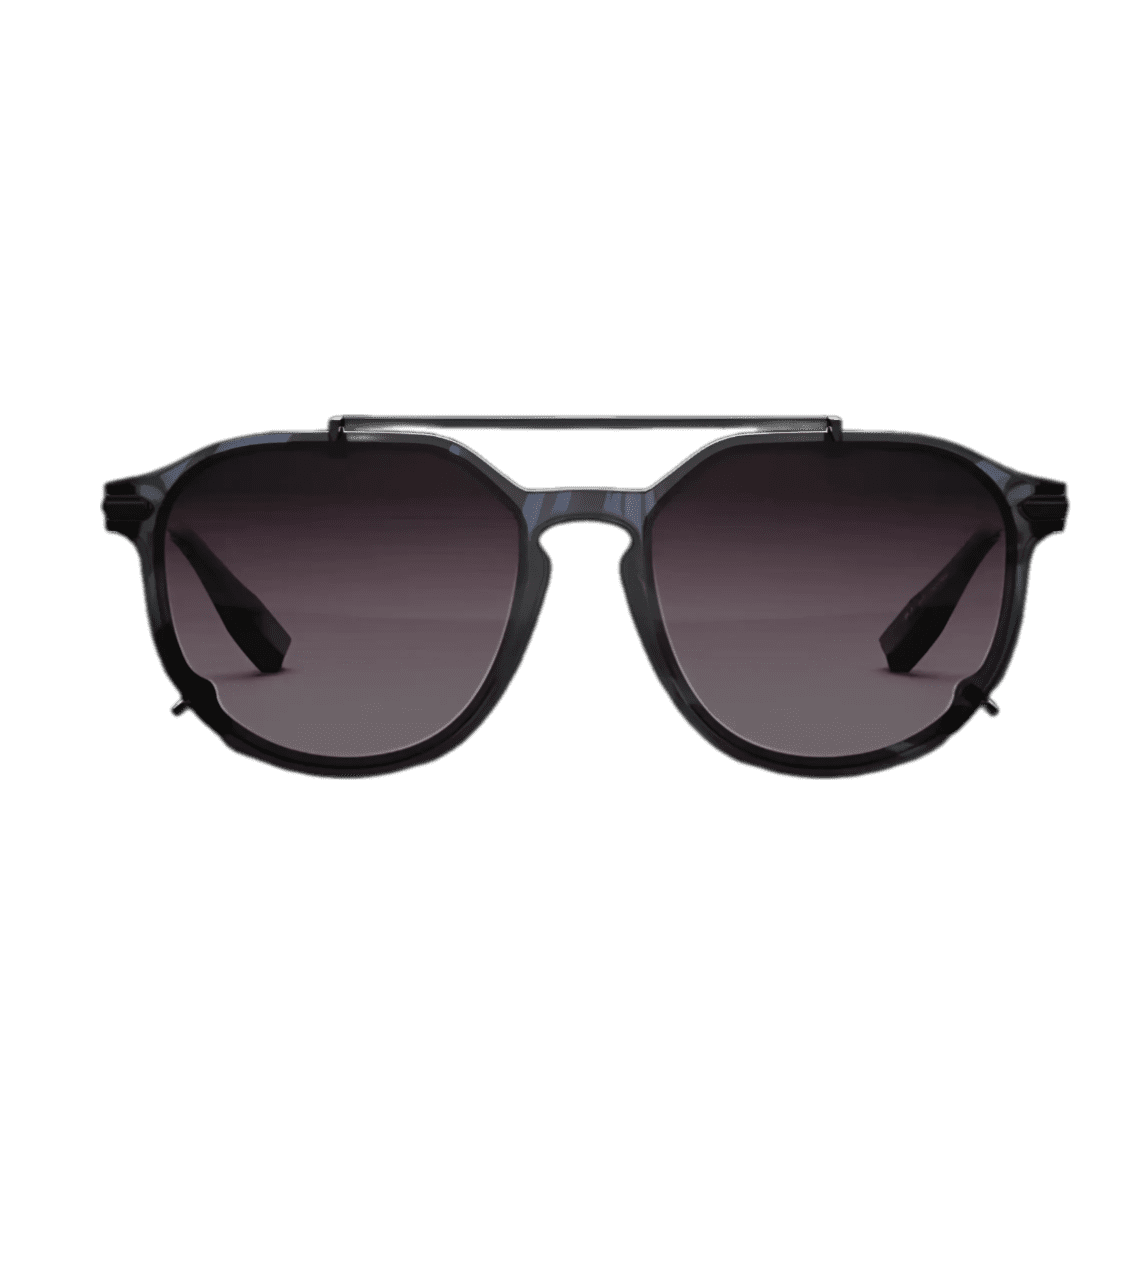 Cолнцезащитные очки Golden Concept Entrepreneur - Black